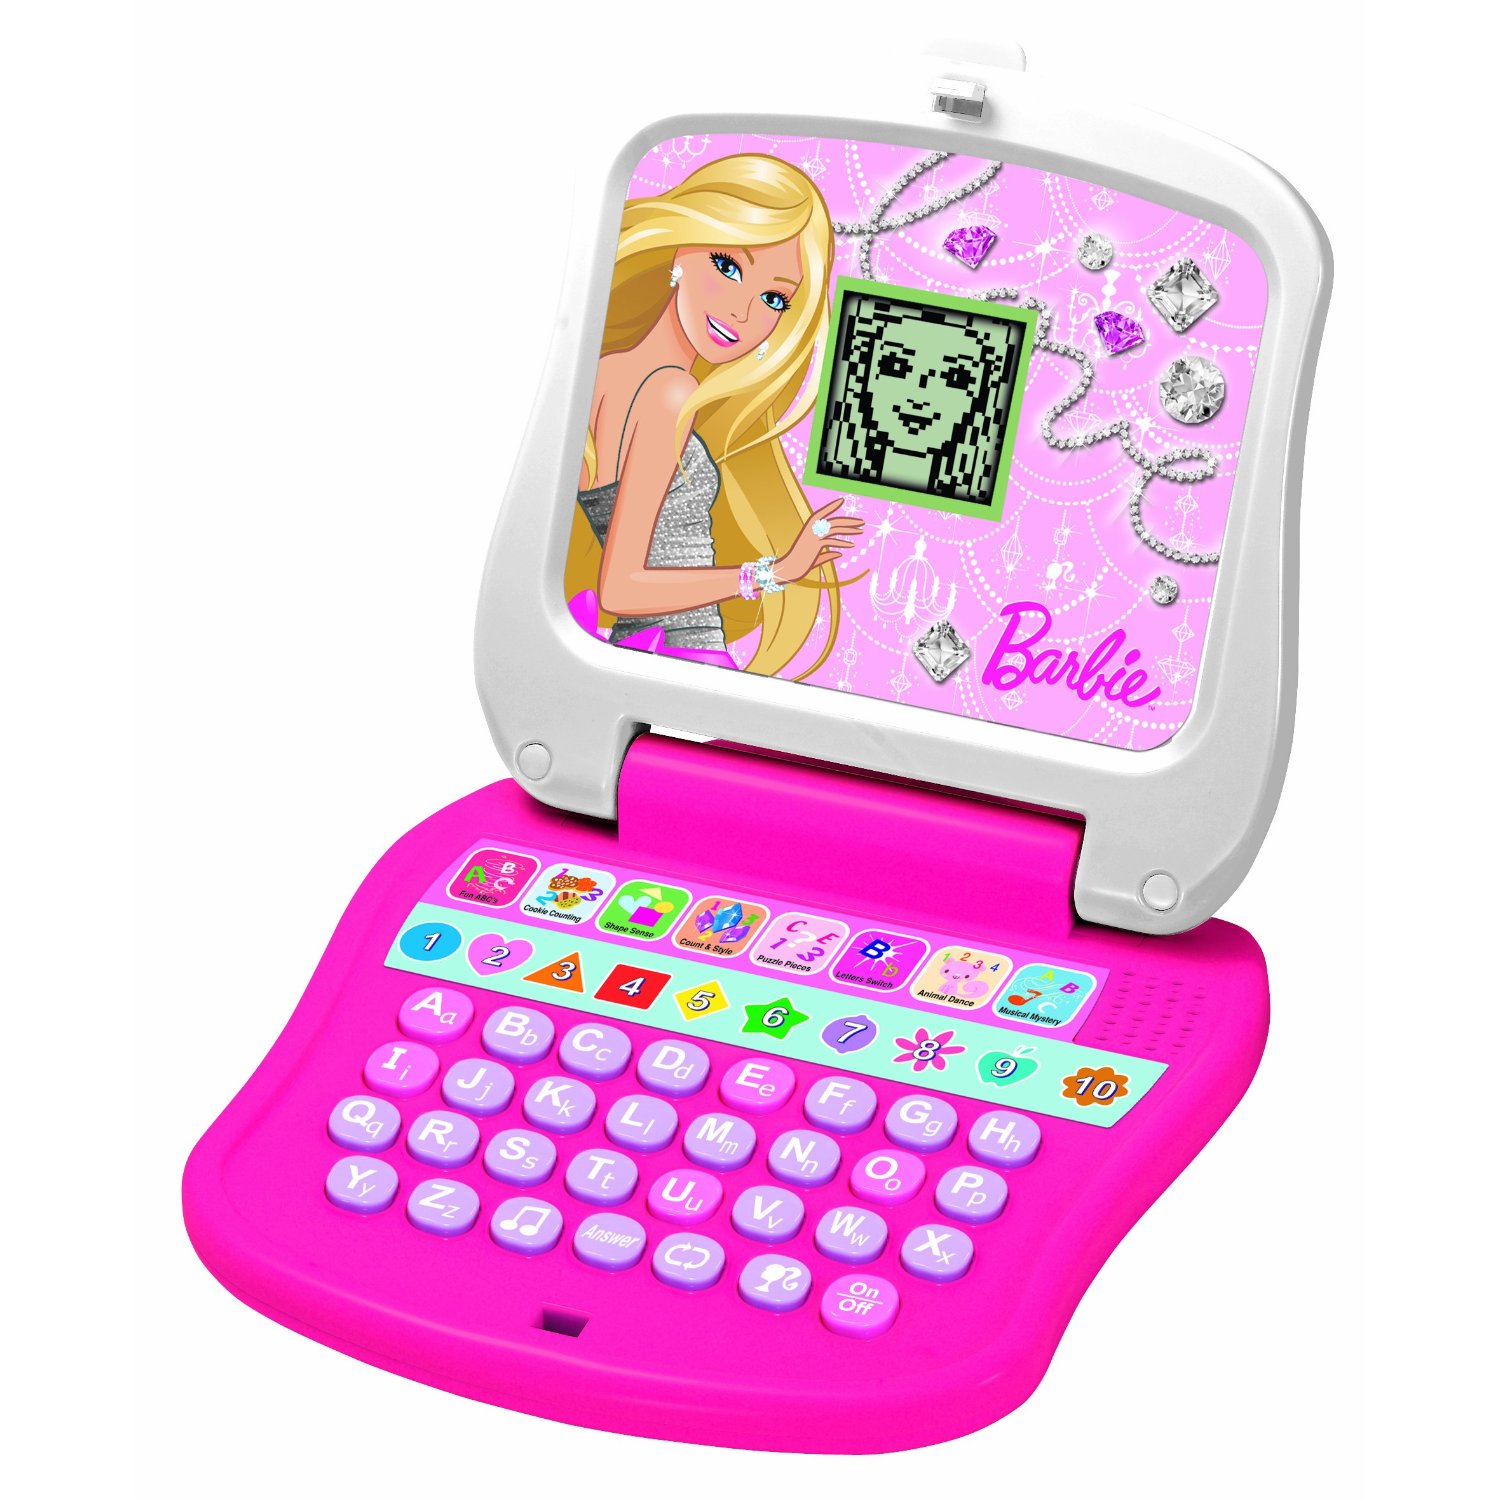 Barbie Laptop